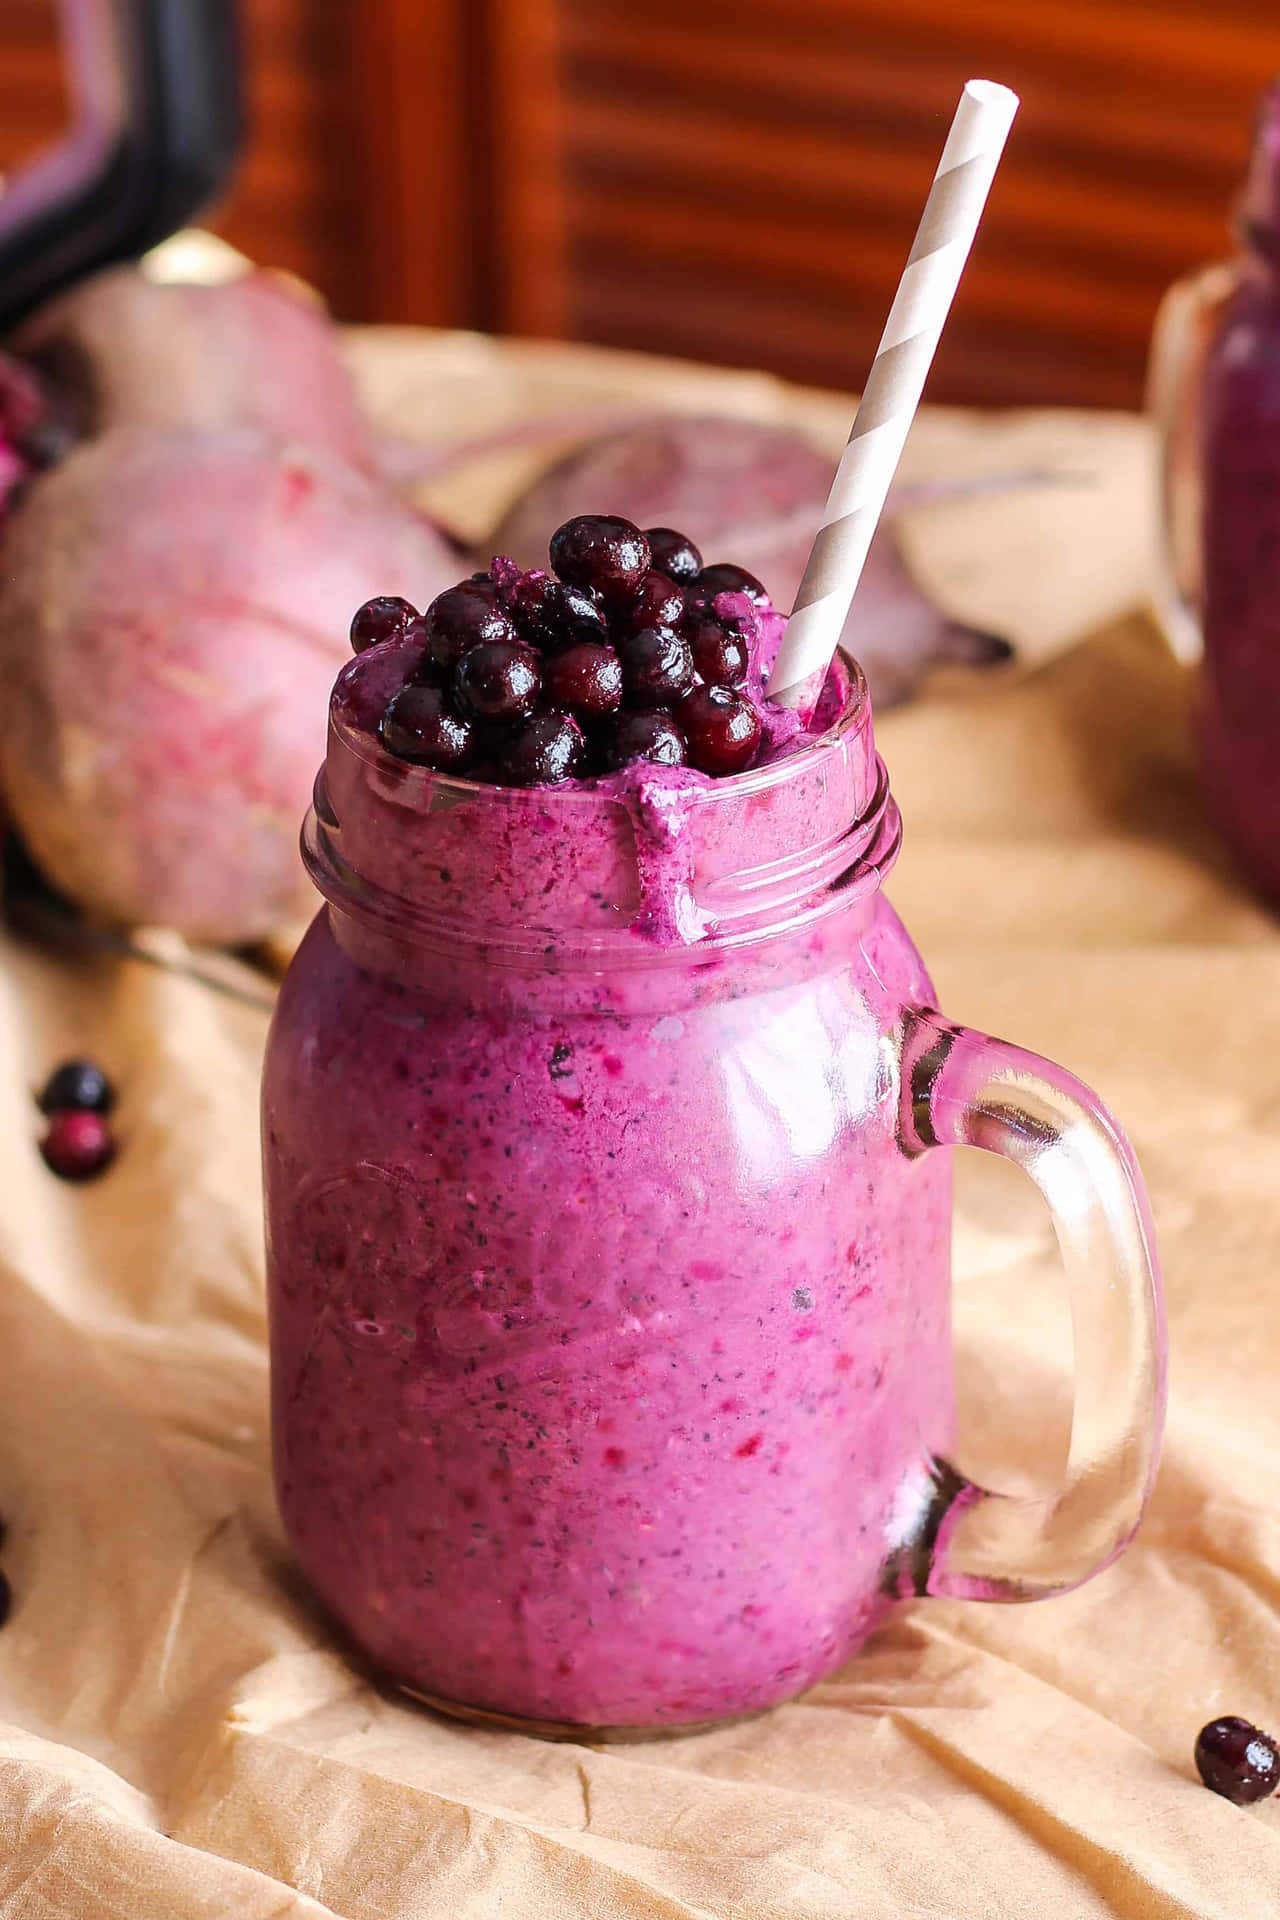 Enjoy a refreshing blueberry smoothie to kickstart your day! Wallpaper